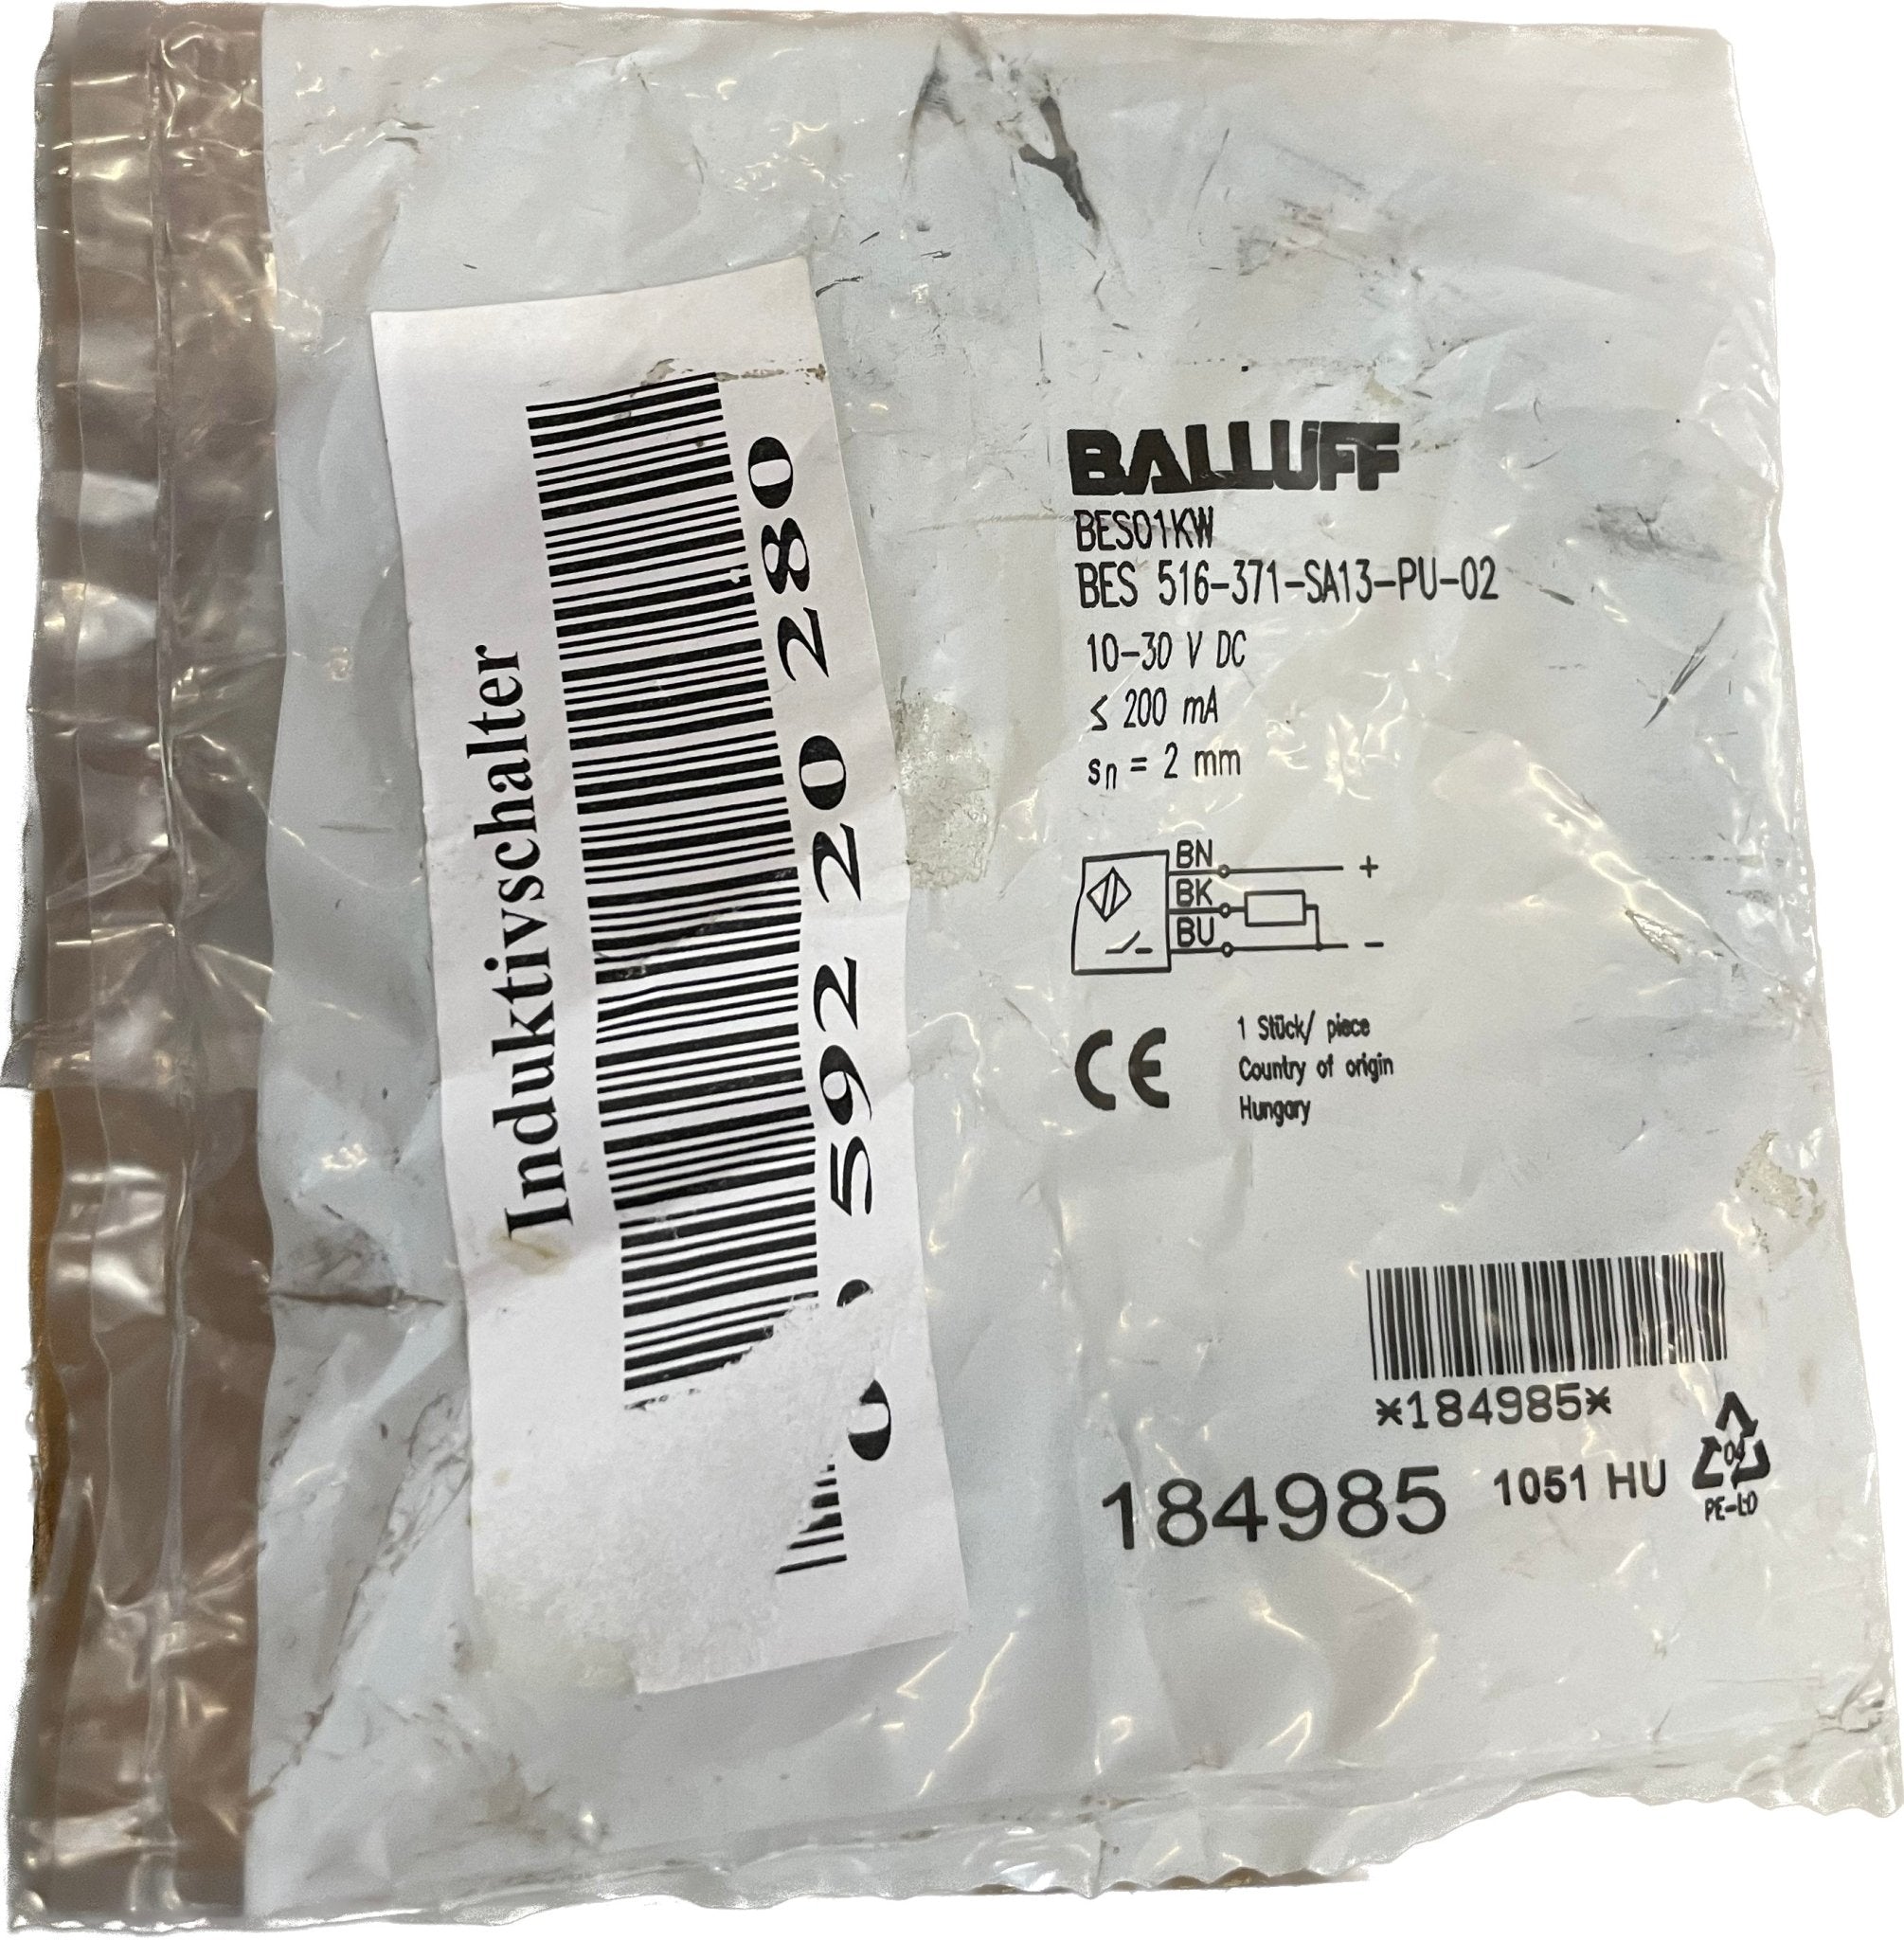 BALLUFF Induktive Standardsensoren mit Vorzugstypen BES 516-371-SA13-PU-02 - #product_category# | Klenk Maschinenhandel